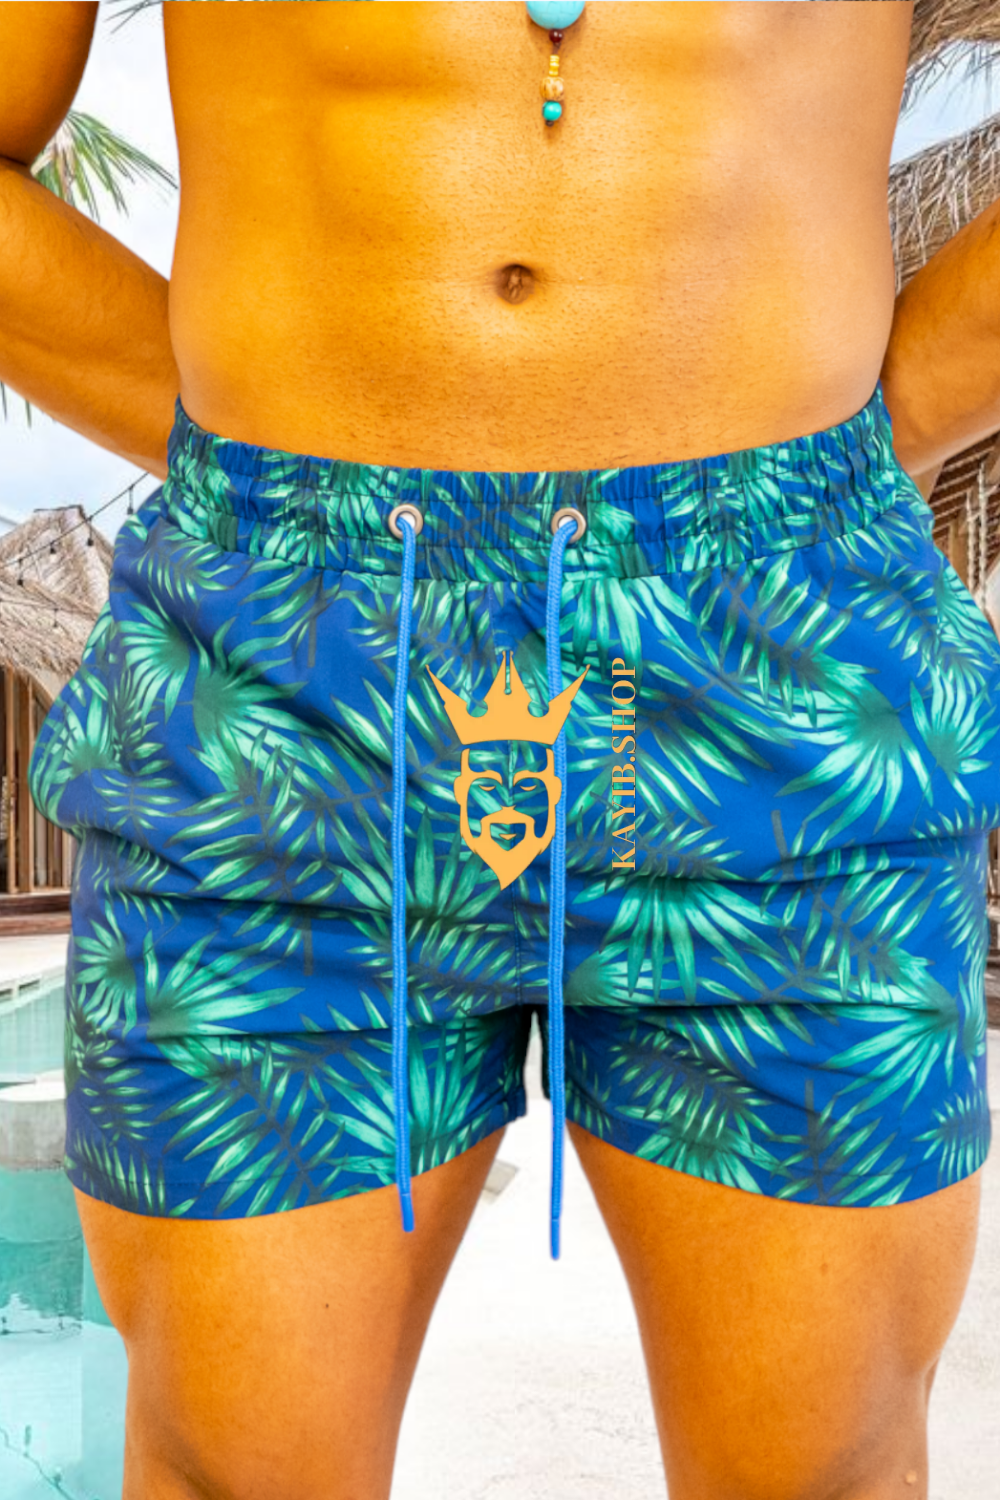 Summer Men's Swimwear & Beach Shorts - Perfect for All Water Activities